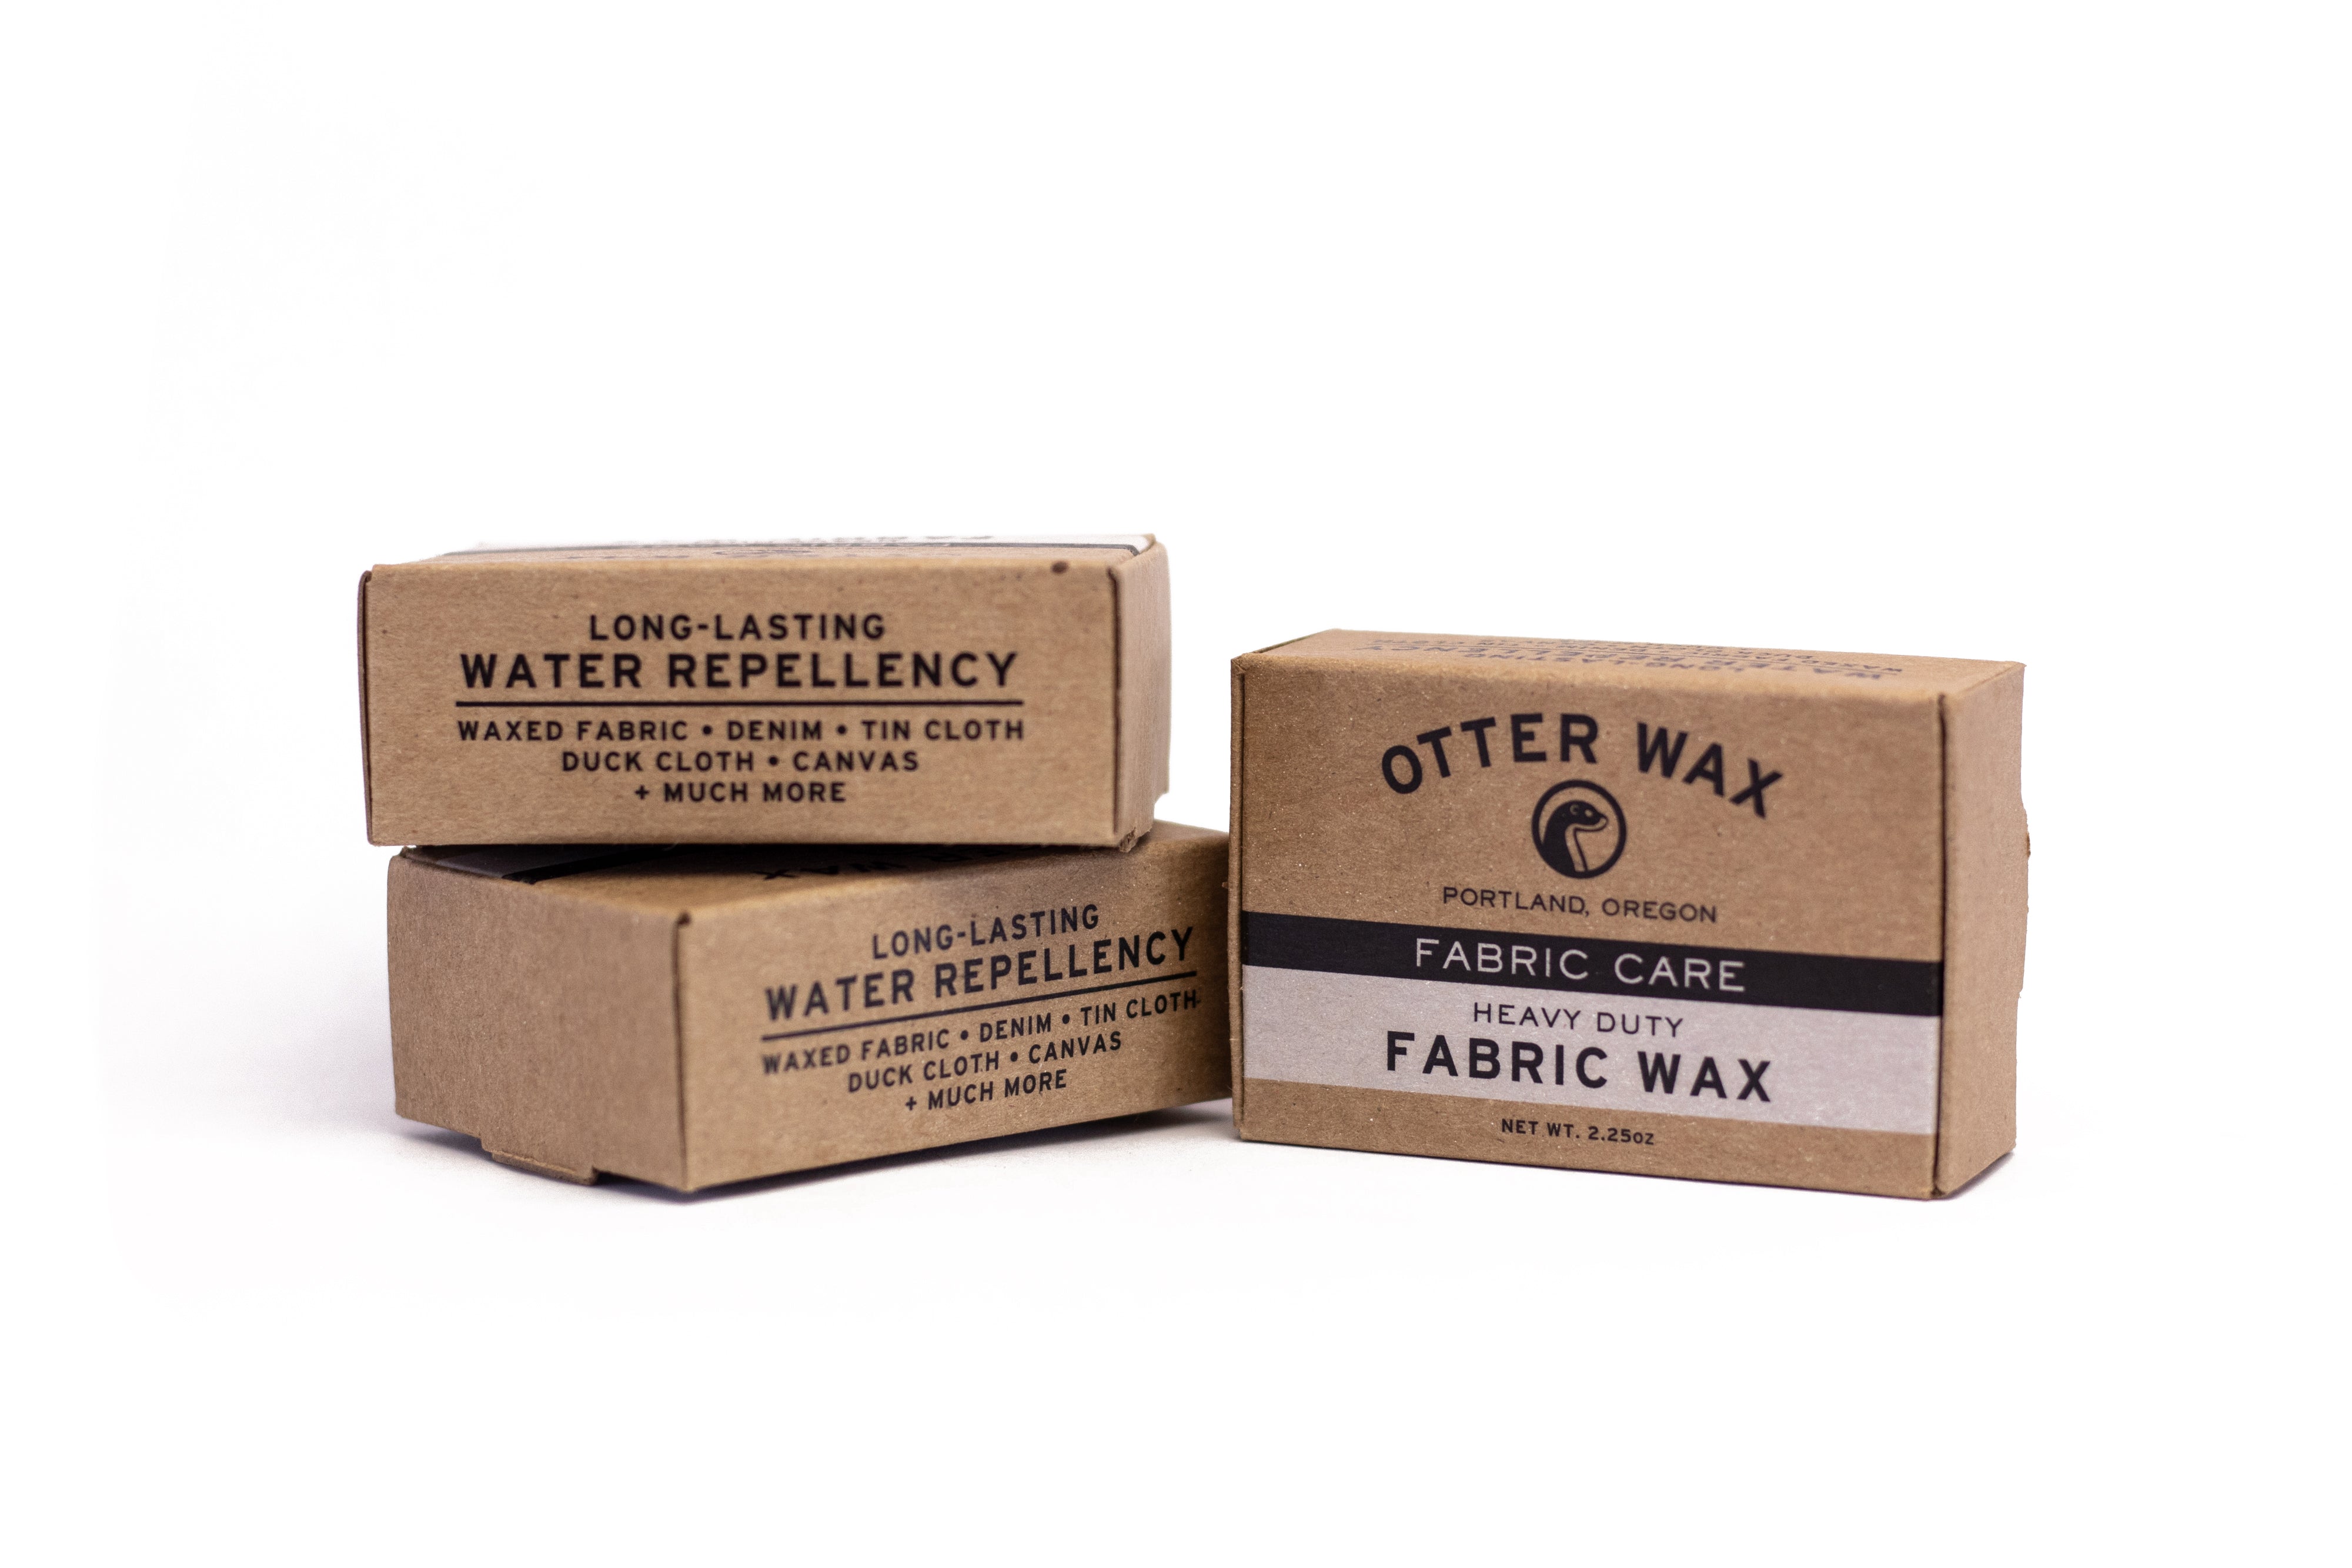 Heavy duty fabric wax - Regular